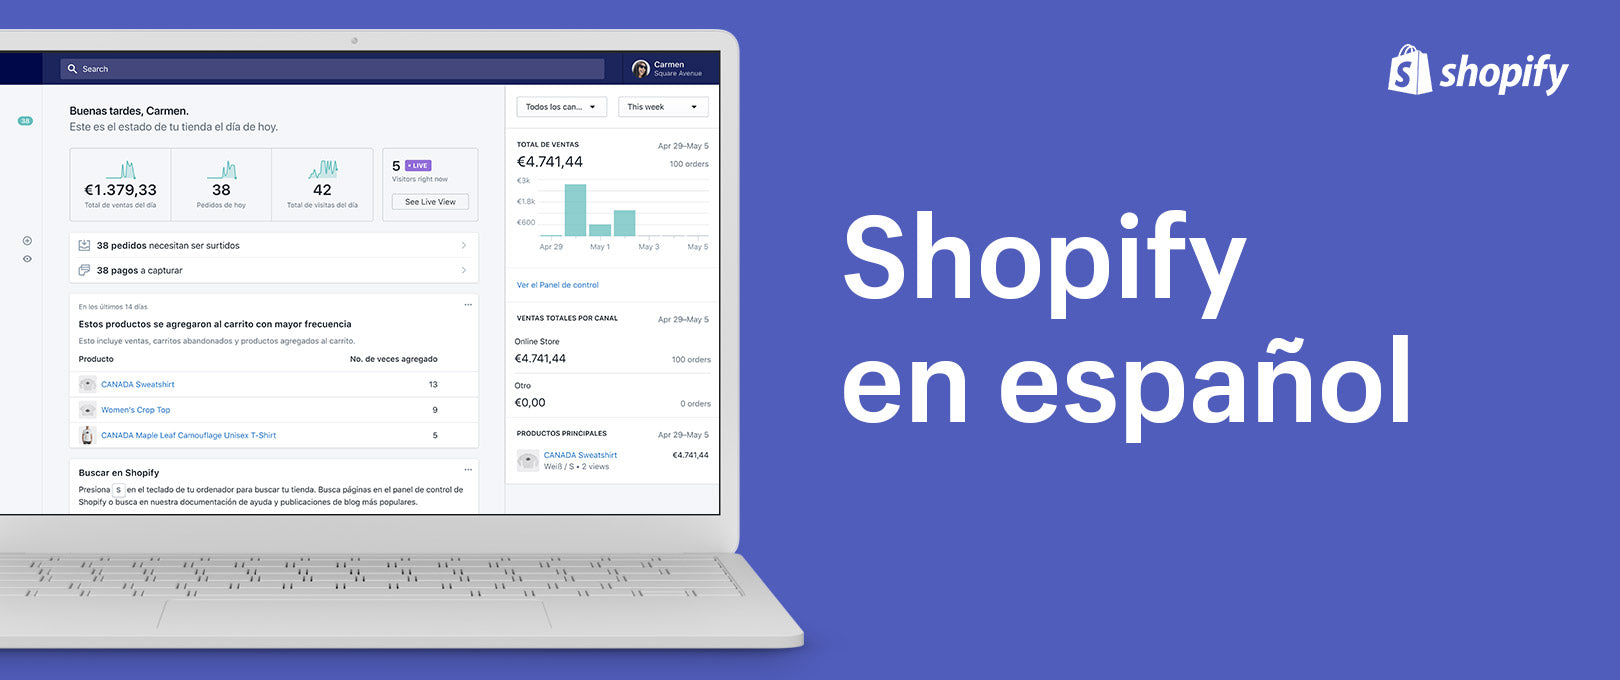 Shopify en español - Beta